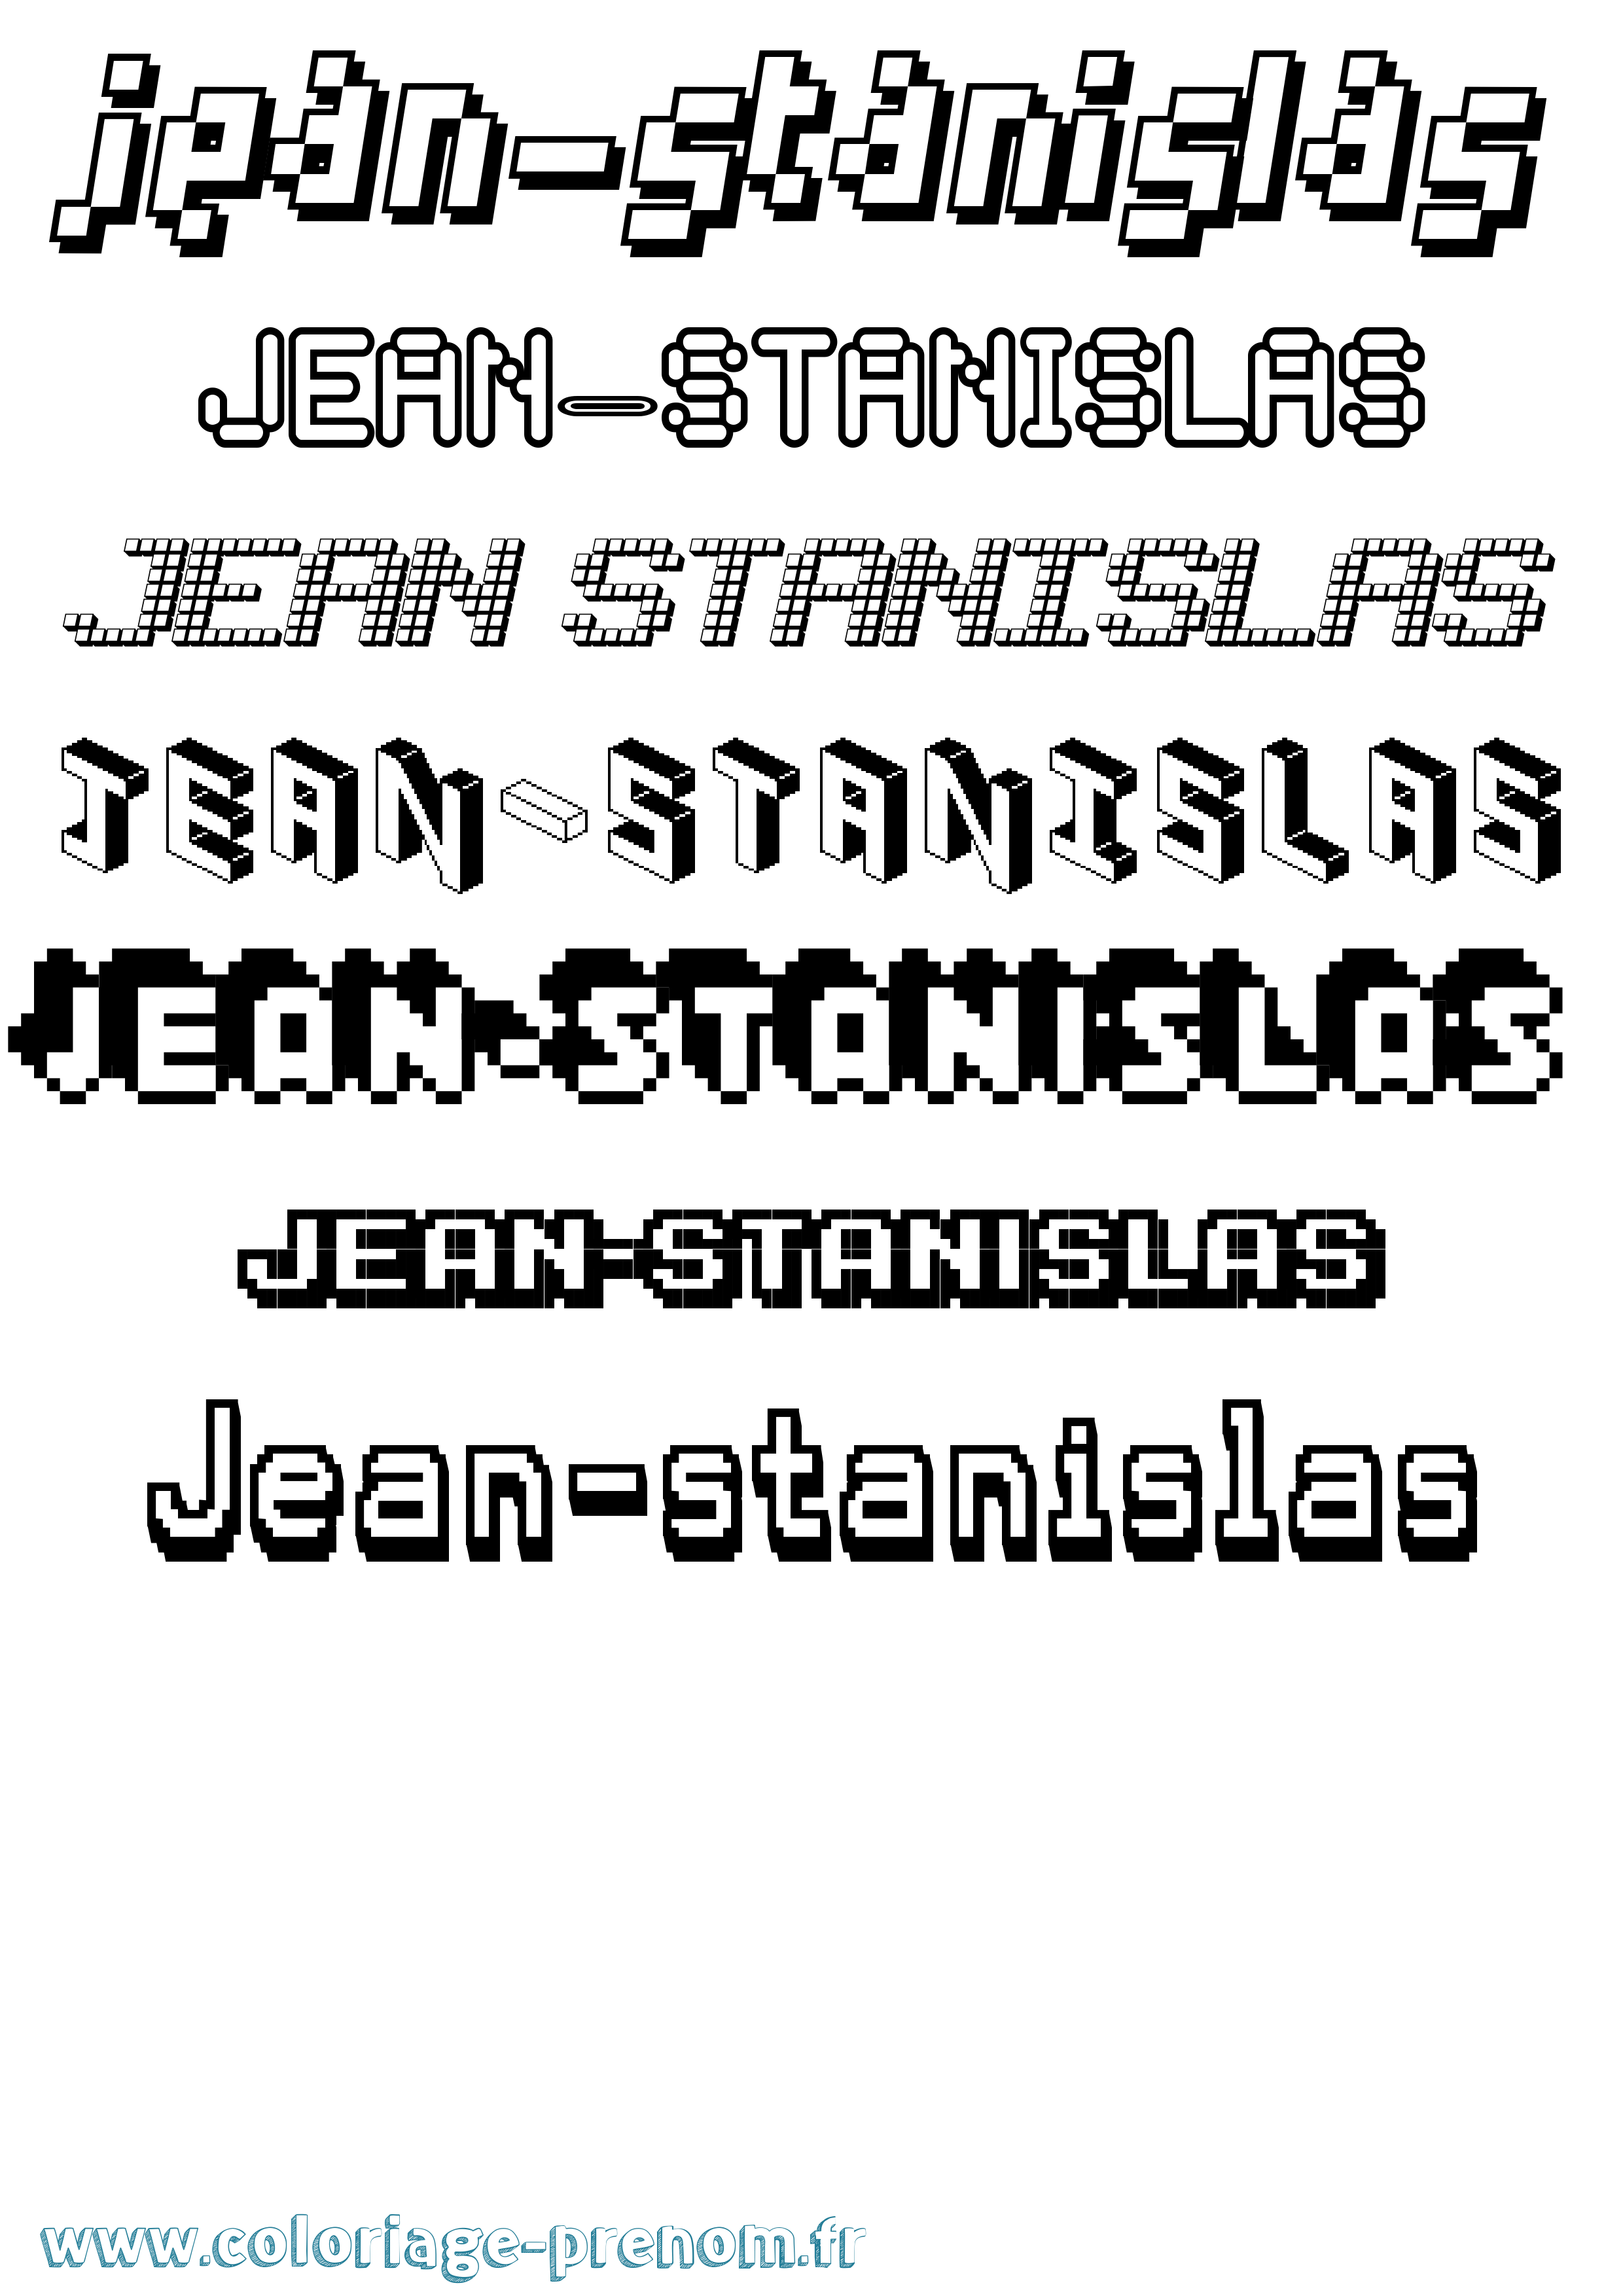 Coloriage prénom Jean-Stanislas Pixel